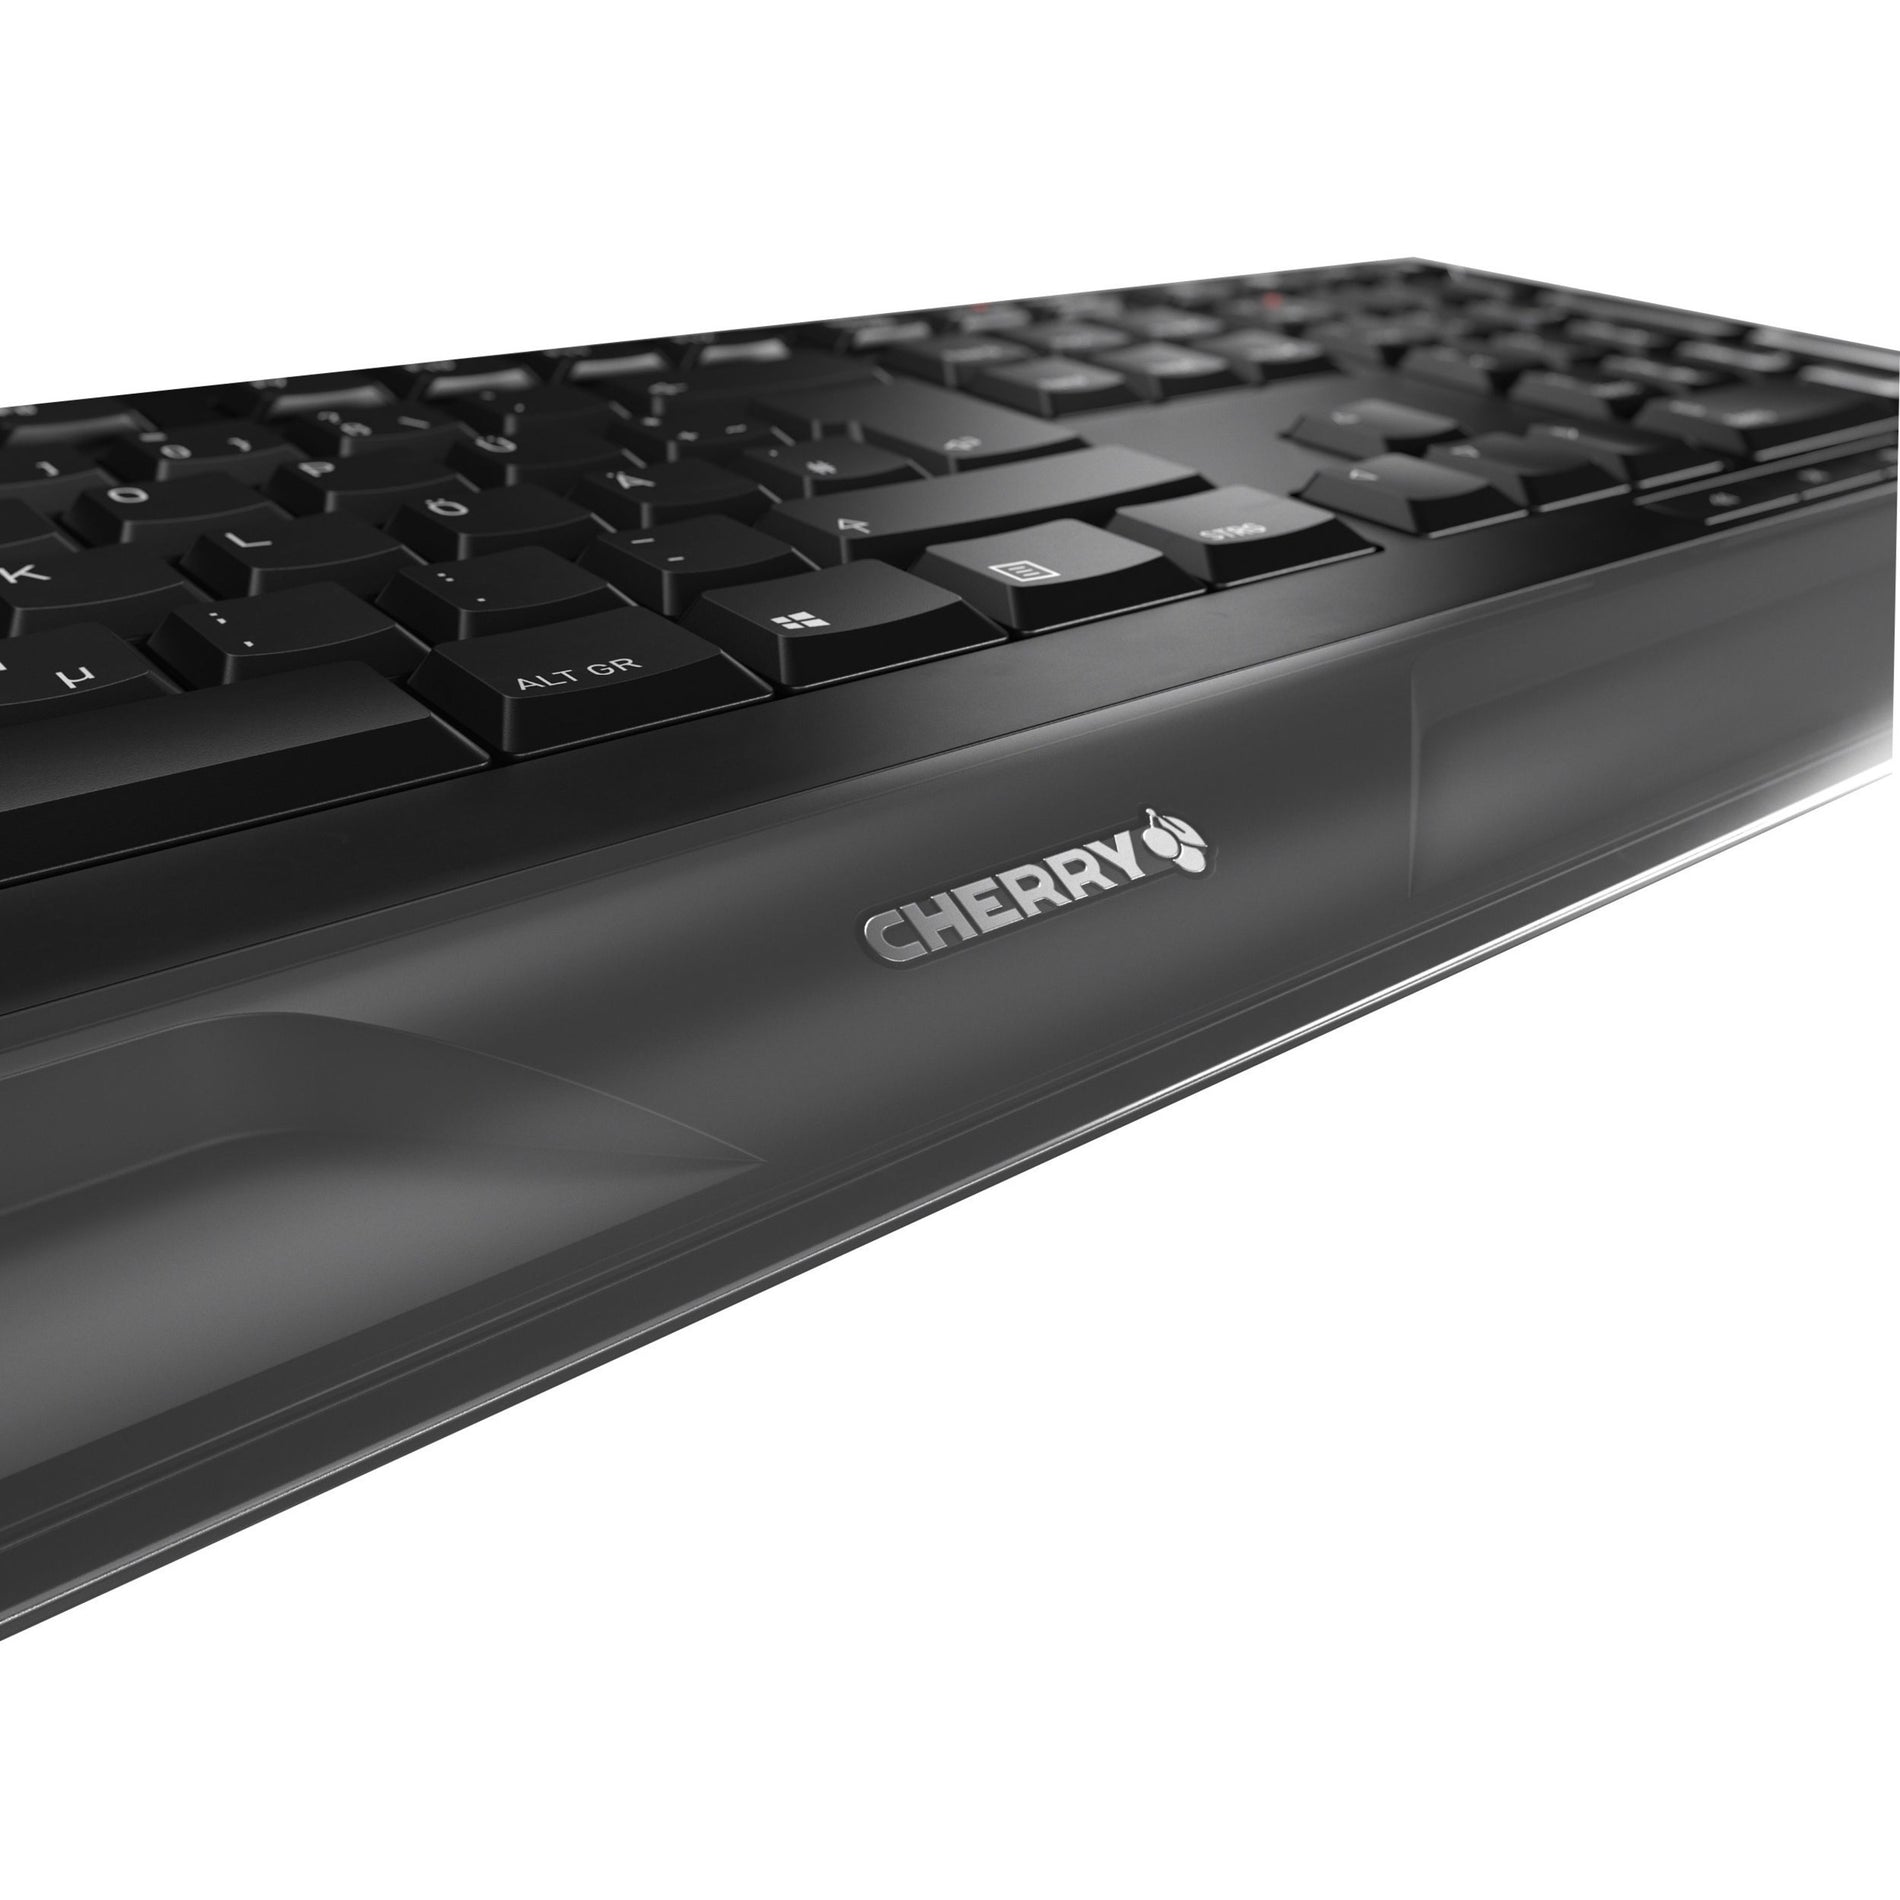 CHERRY JD-7000EU-2 GENTIX DESKTOP Wireless Keyboard and Mouse, Ergonomic, Anti-slip, Battery Indicator